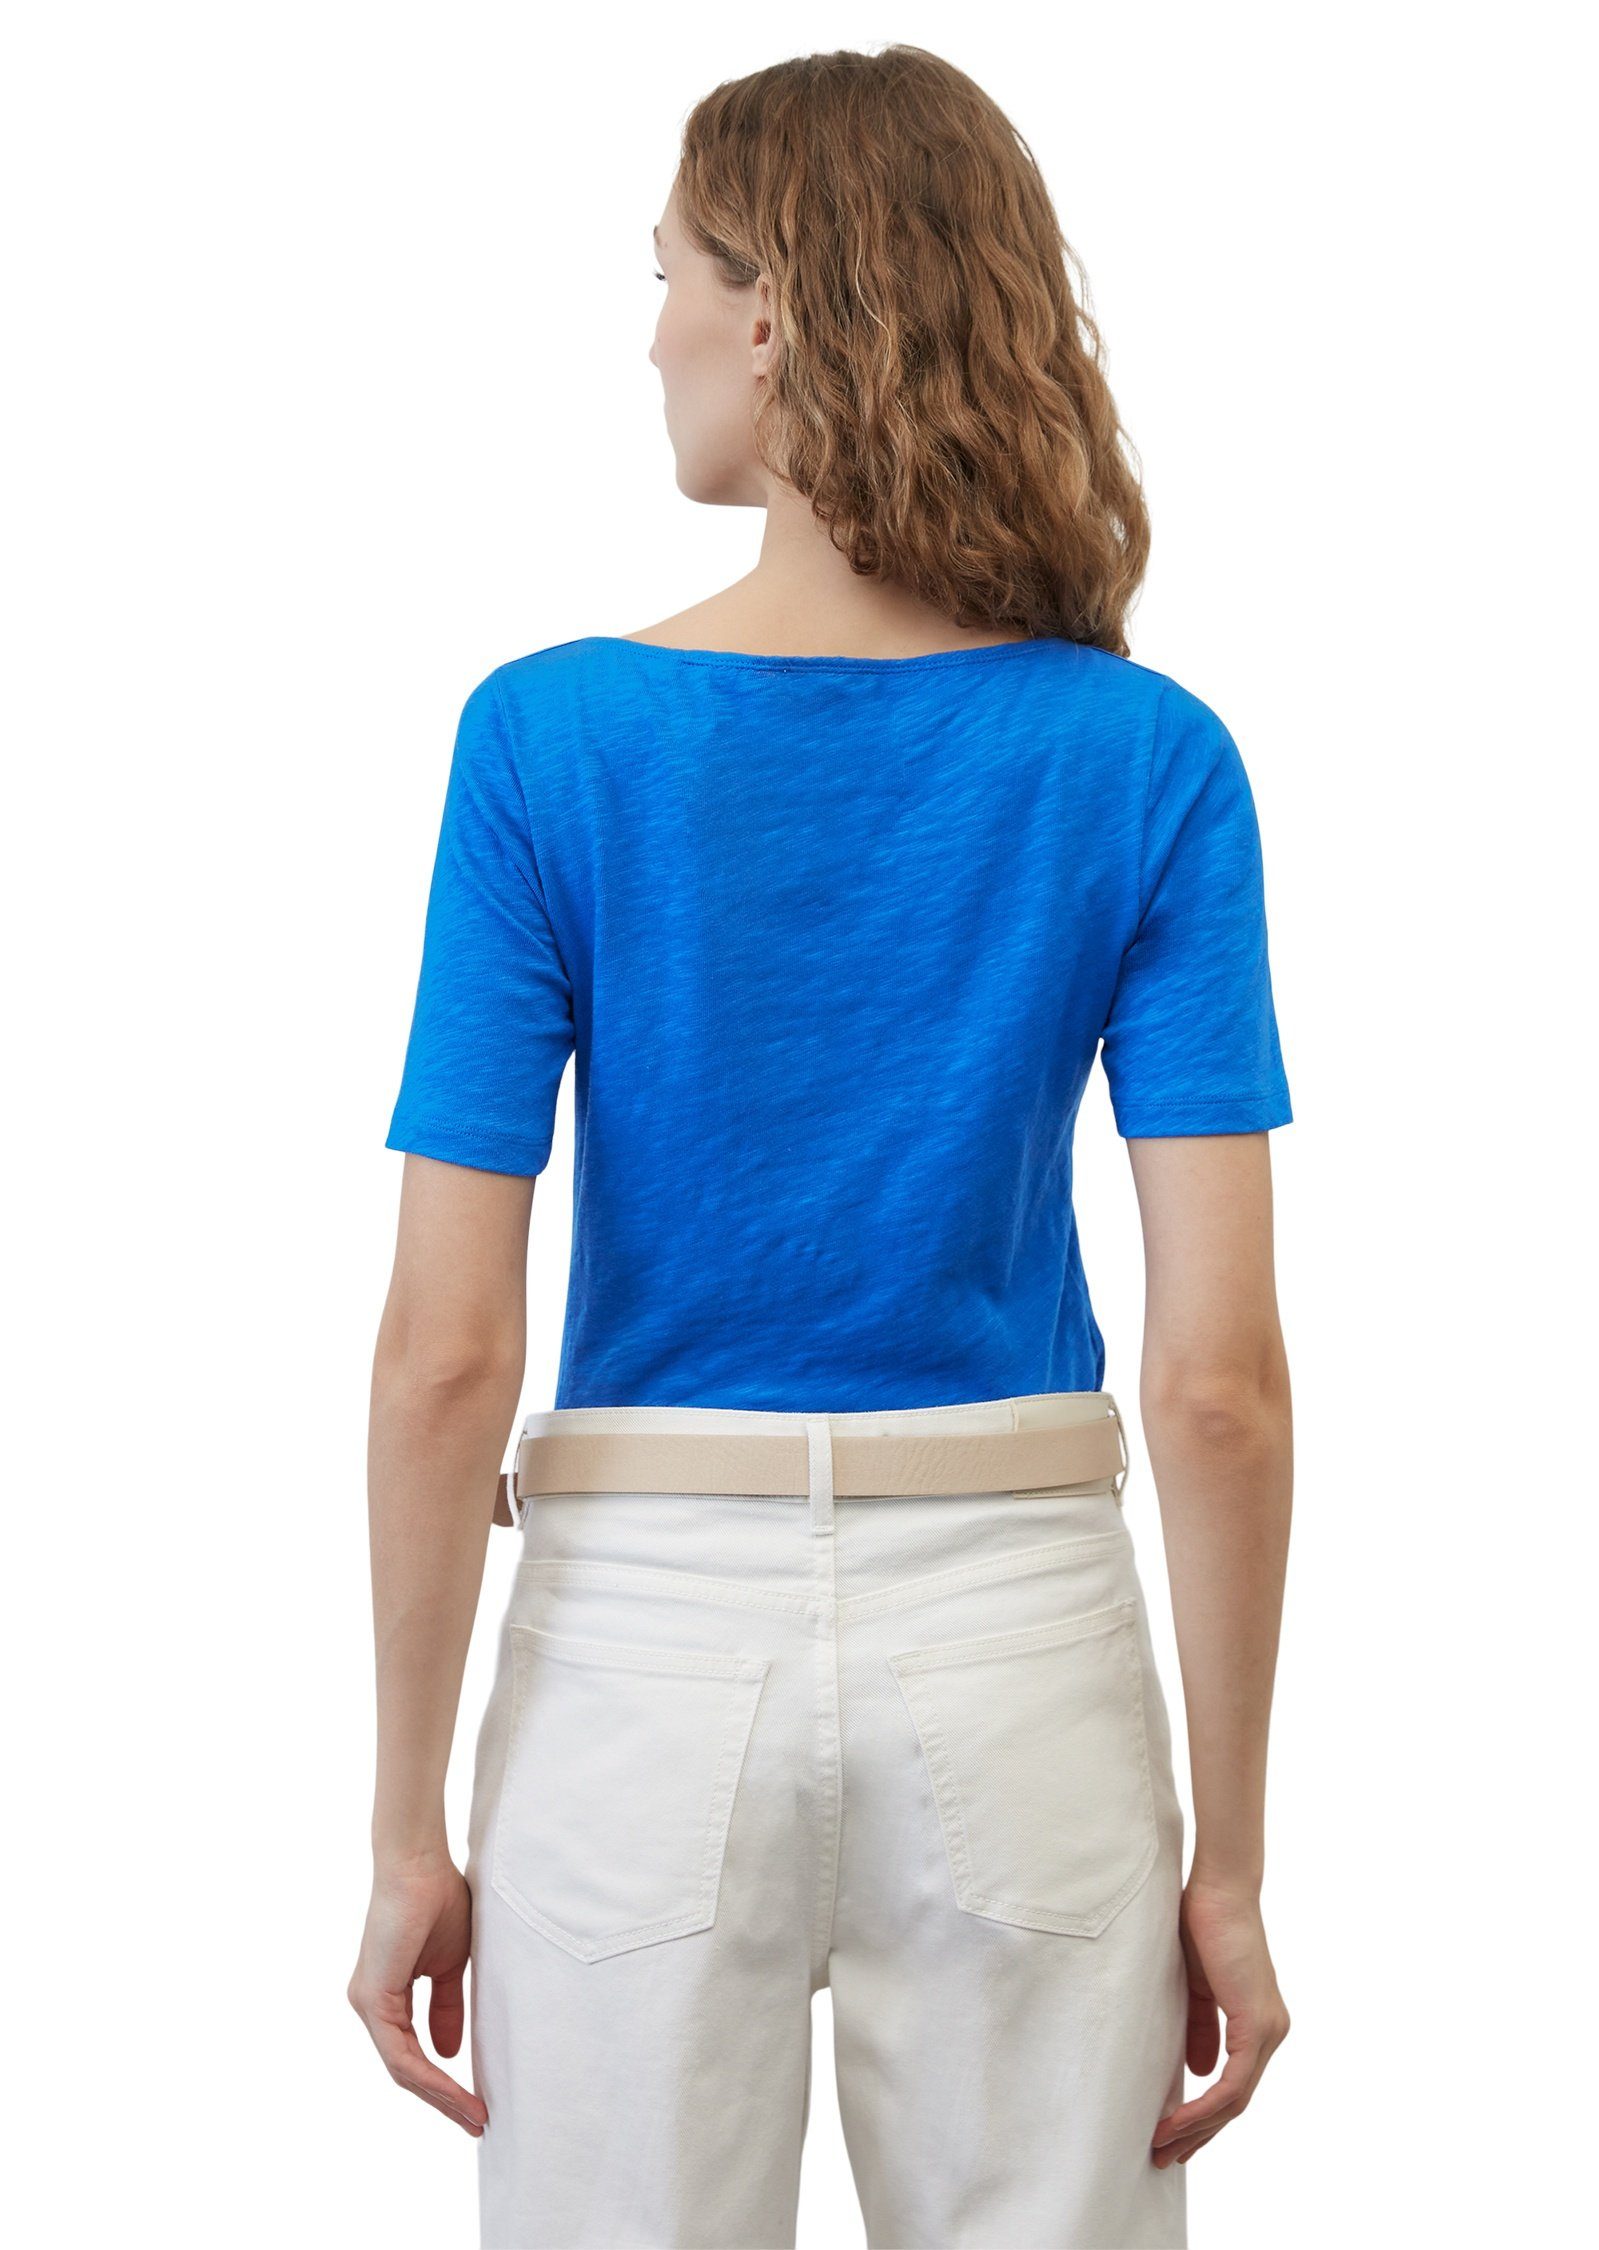 Marc O'Polo T-Shirt aus blue Organic Cotton-Qualität